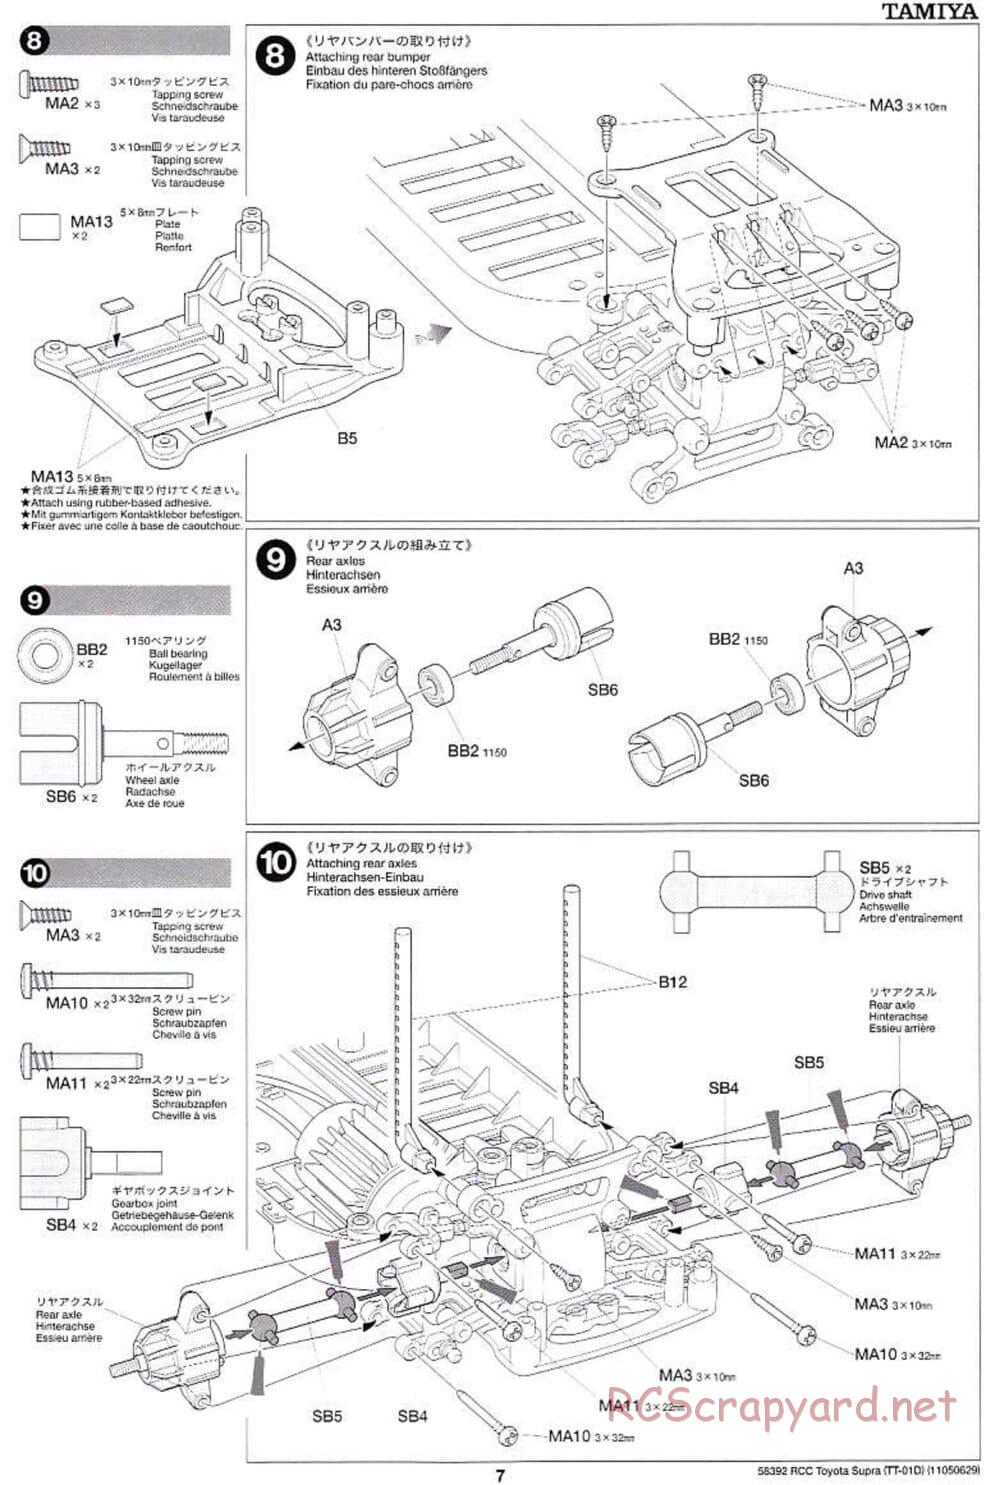 Tamiya - Toyota Supra - Drift Spec - TT-01D Chassis - Manual - Page 7